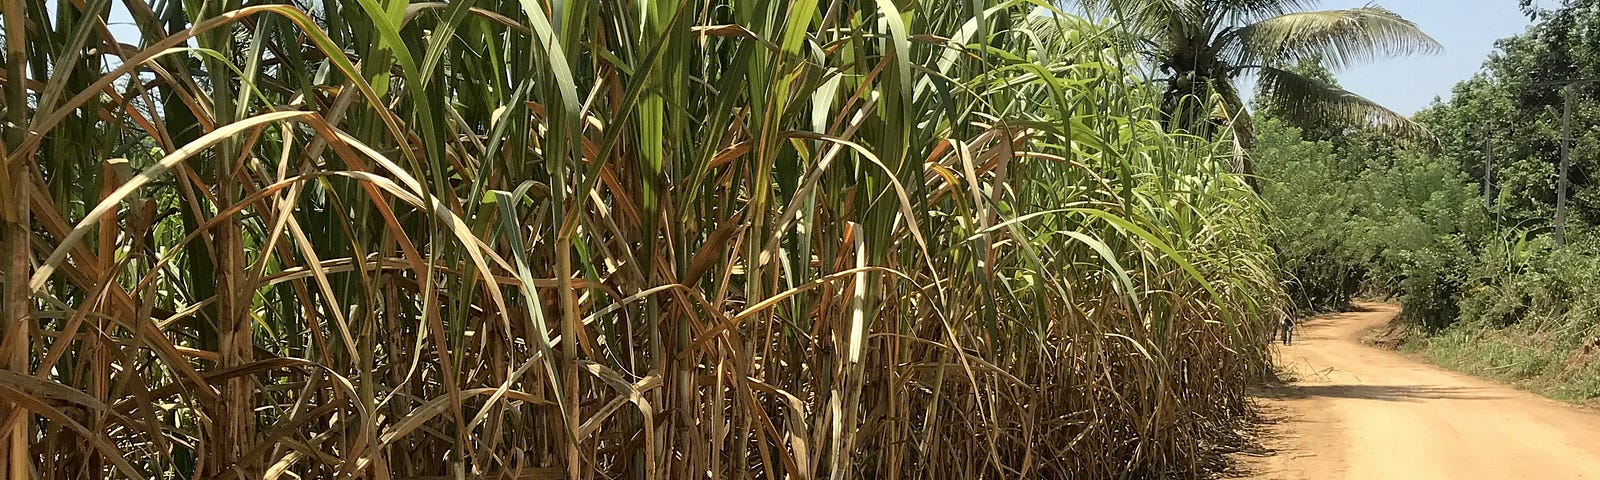 A Feild of Sugarcane